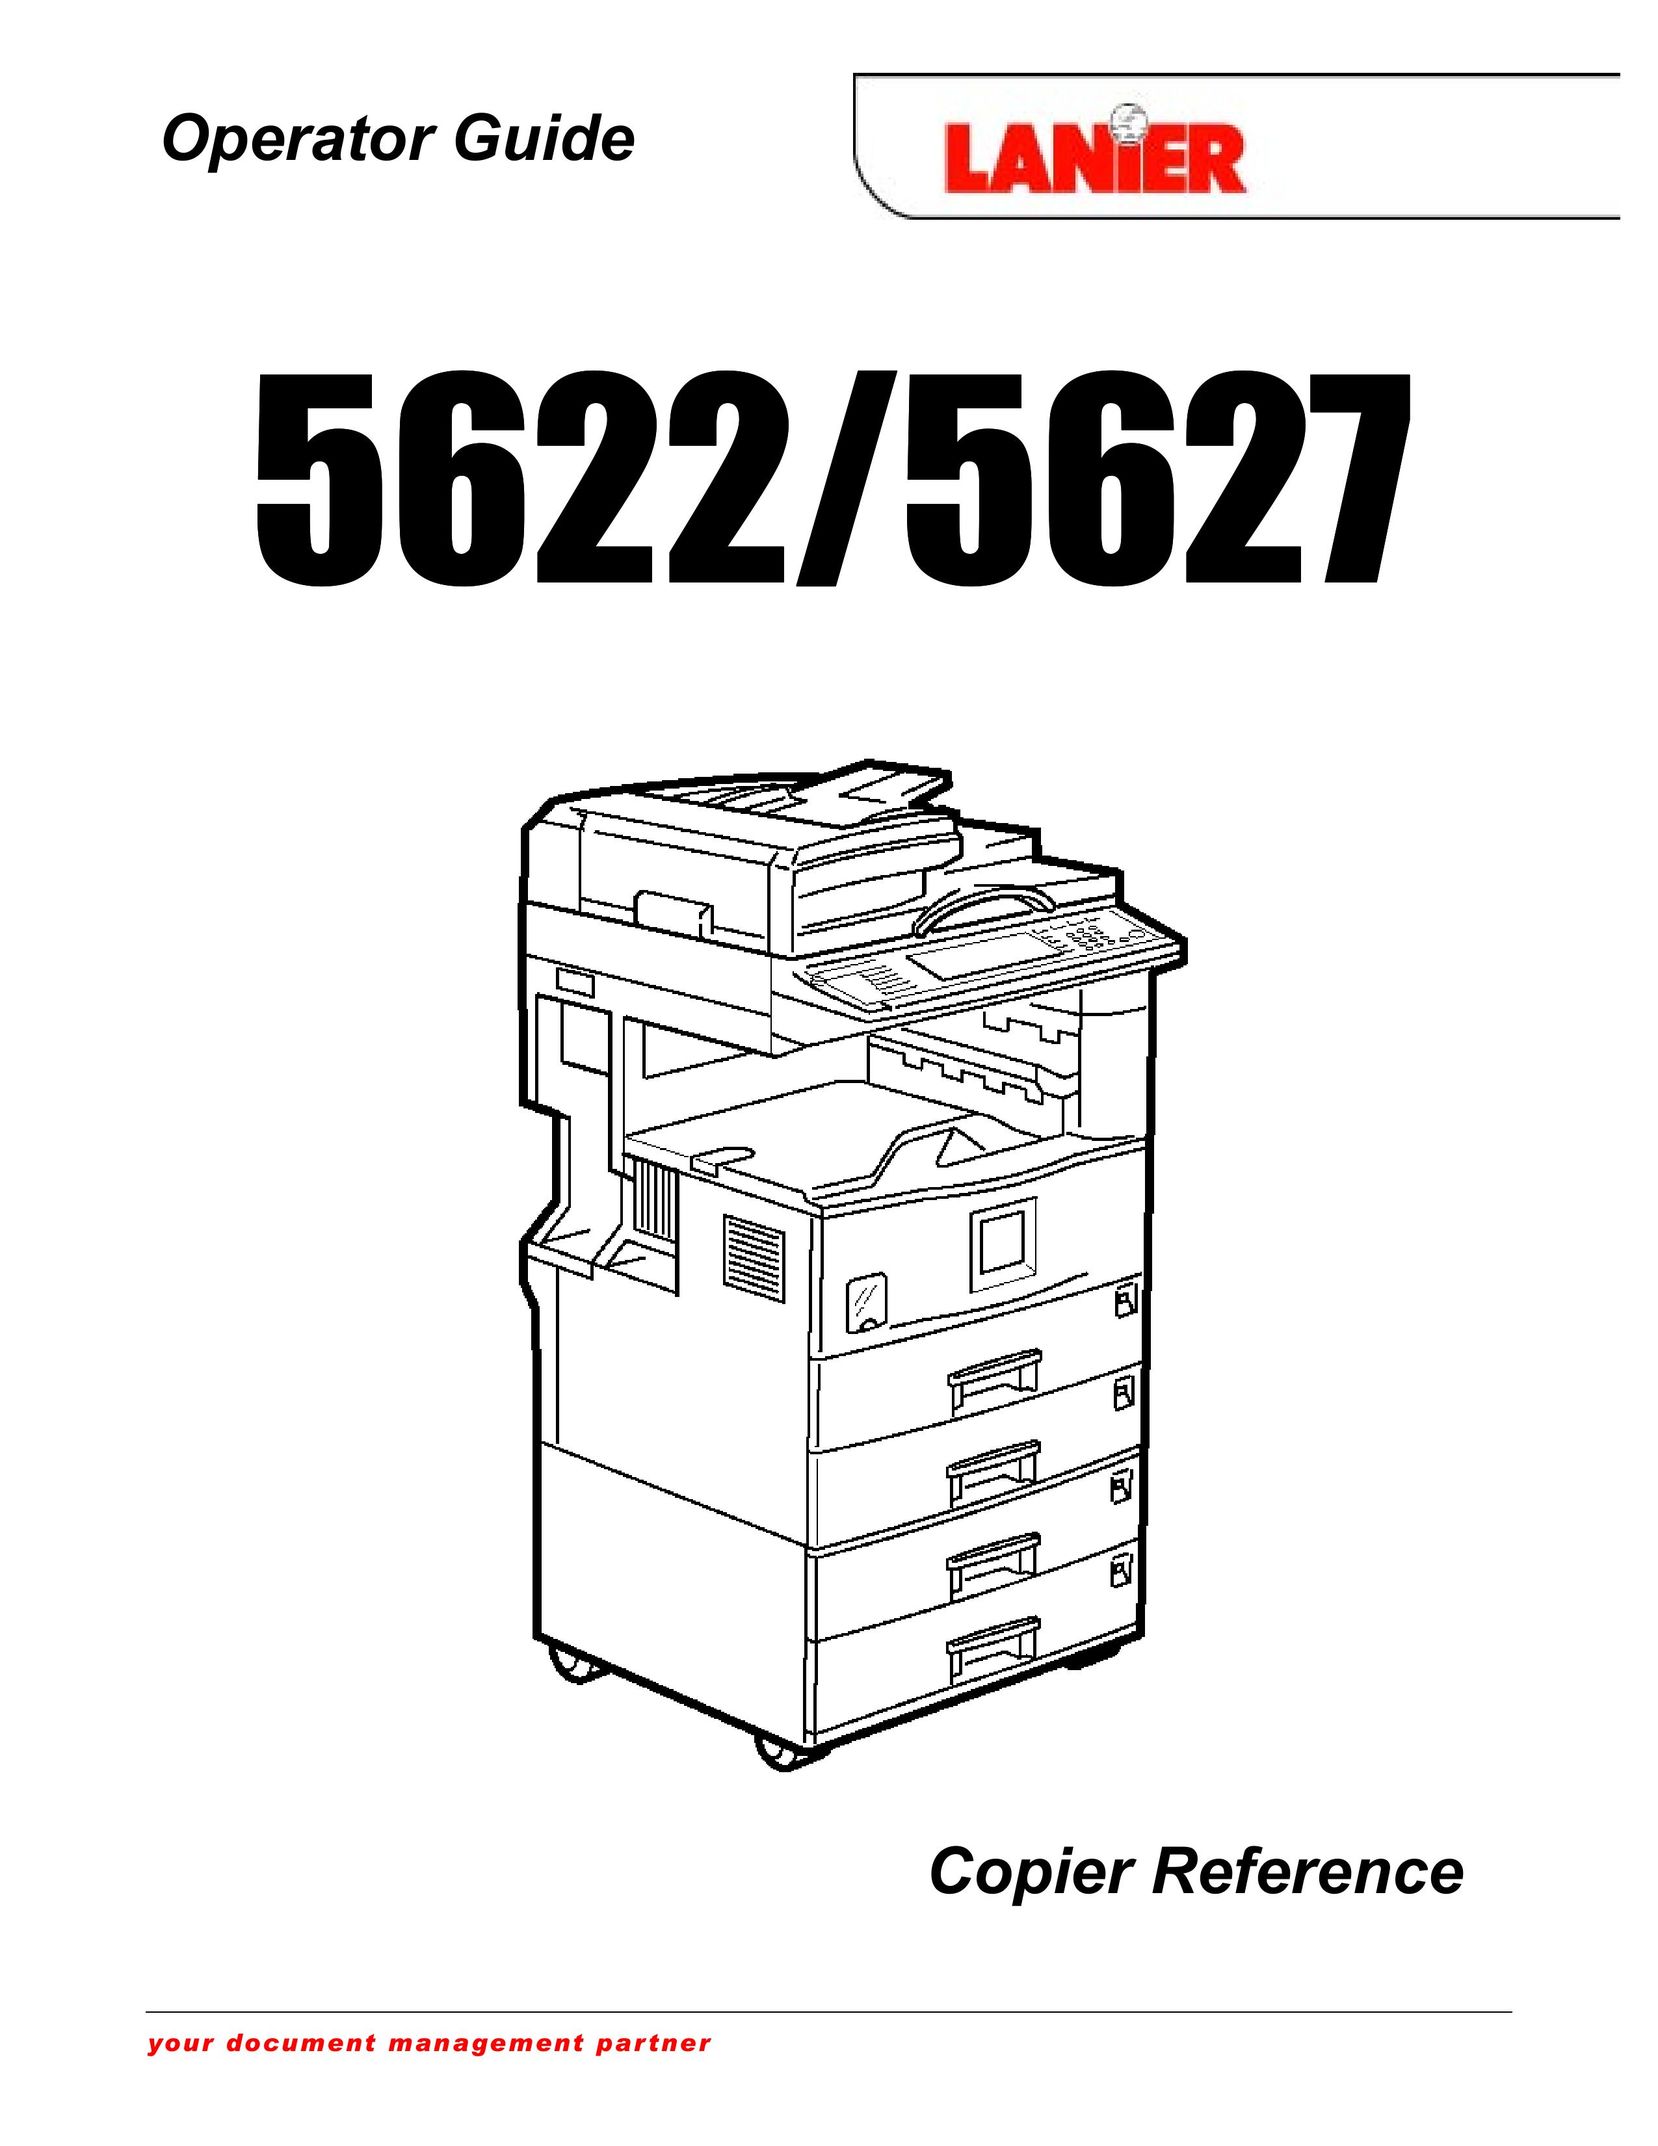 Lanier 1027 Copier User Manual